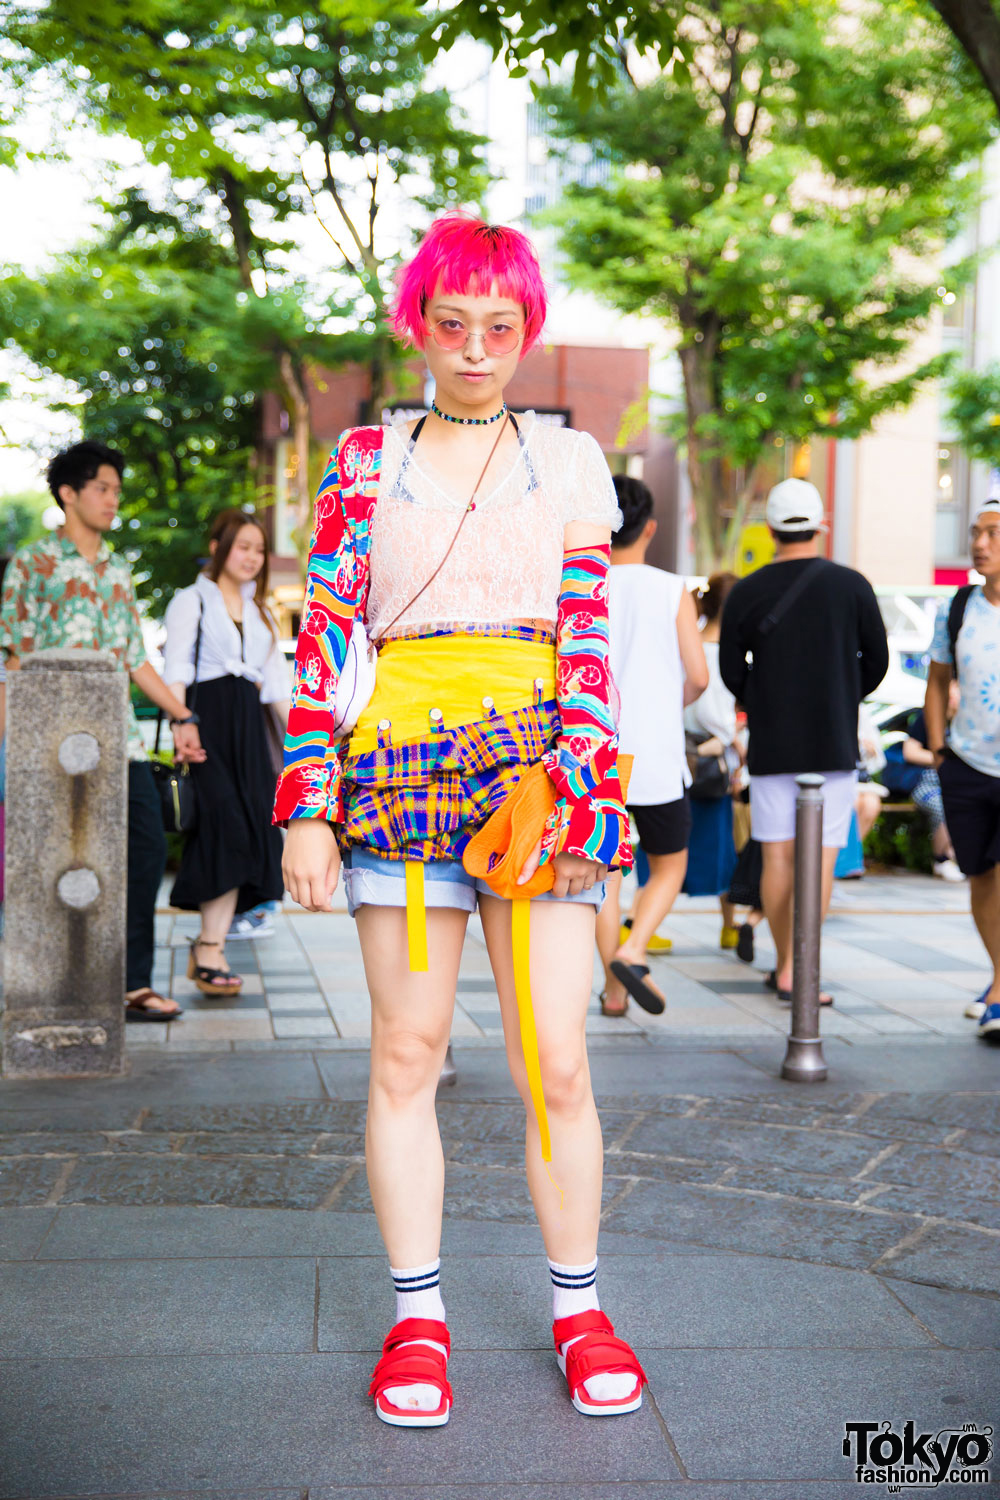 Harajuku Girl in Colorful Vintage Fashion w/ Bubbles, Calvin Klein, Adidas & UFO Catcher Bag